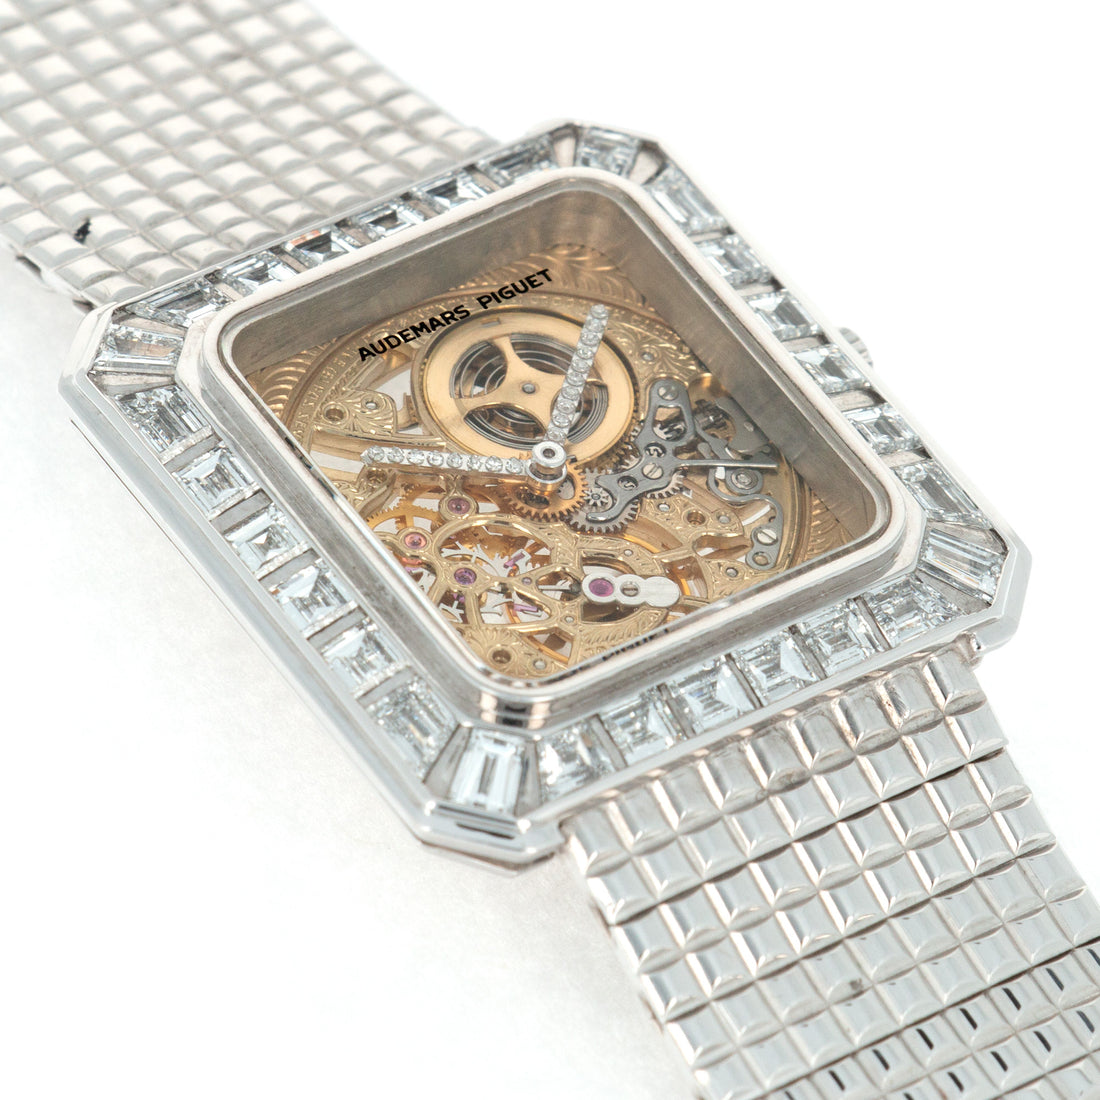 Audemars Piguet White Gold Skeletonized Baguette Diamond Watch